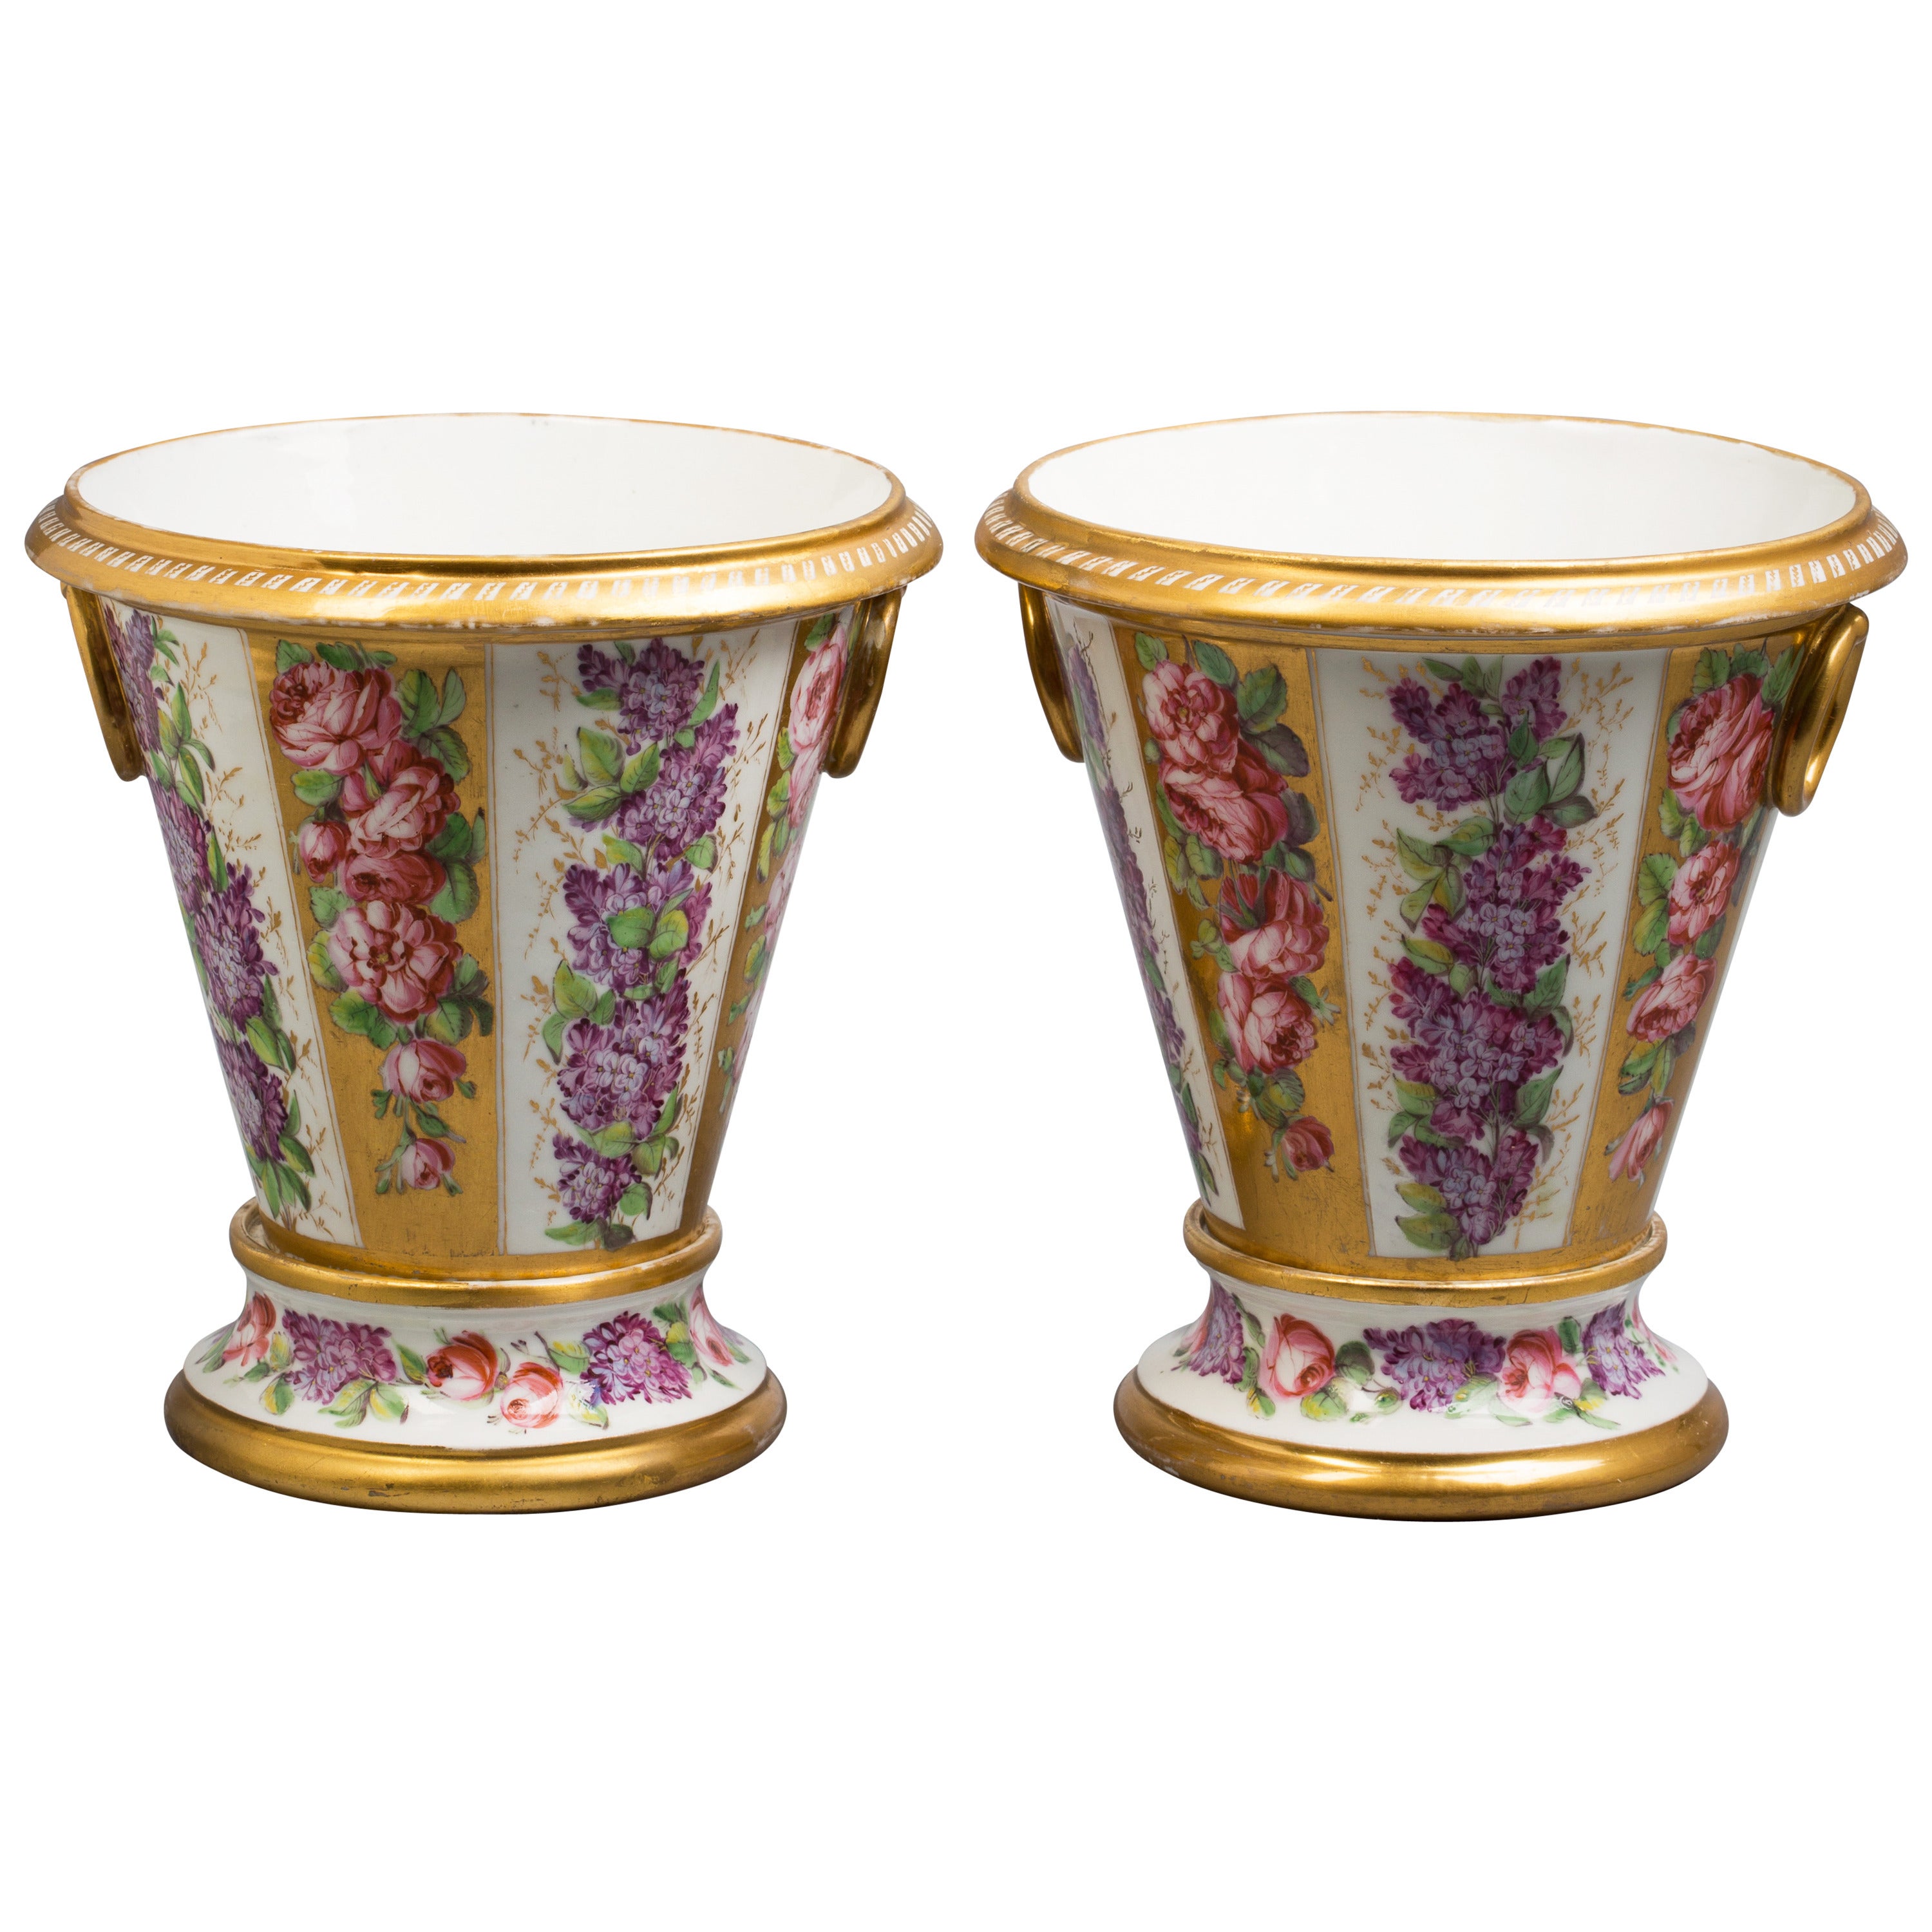 Pair of Paris Porcelain Cachepots and Stands, circa 1820